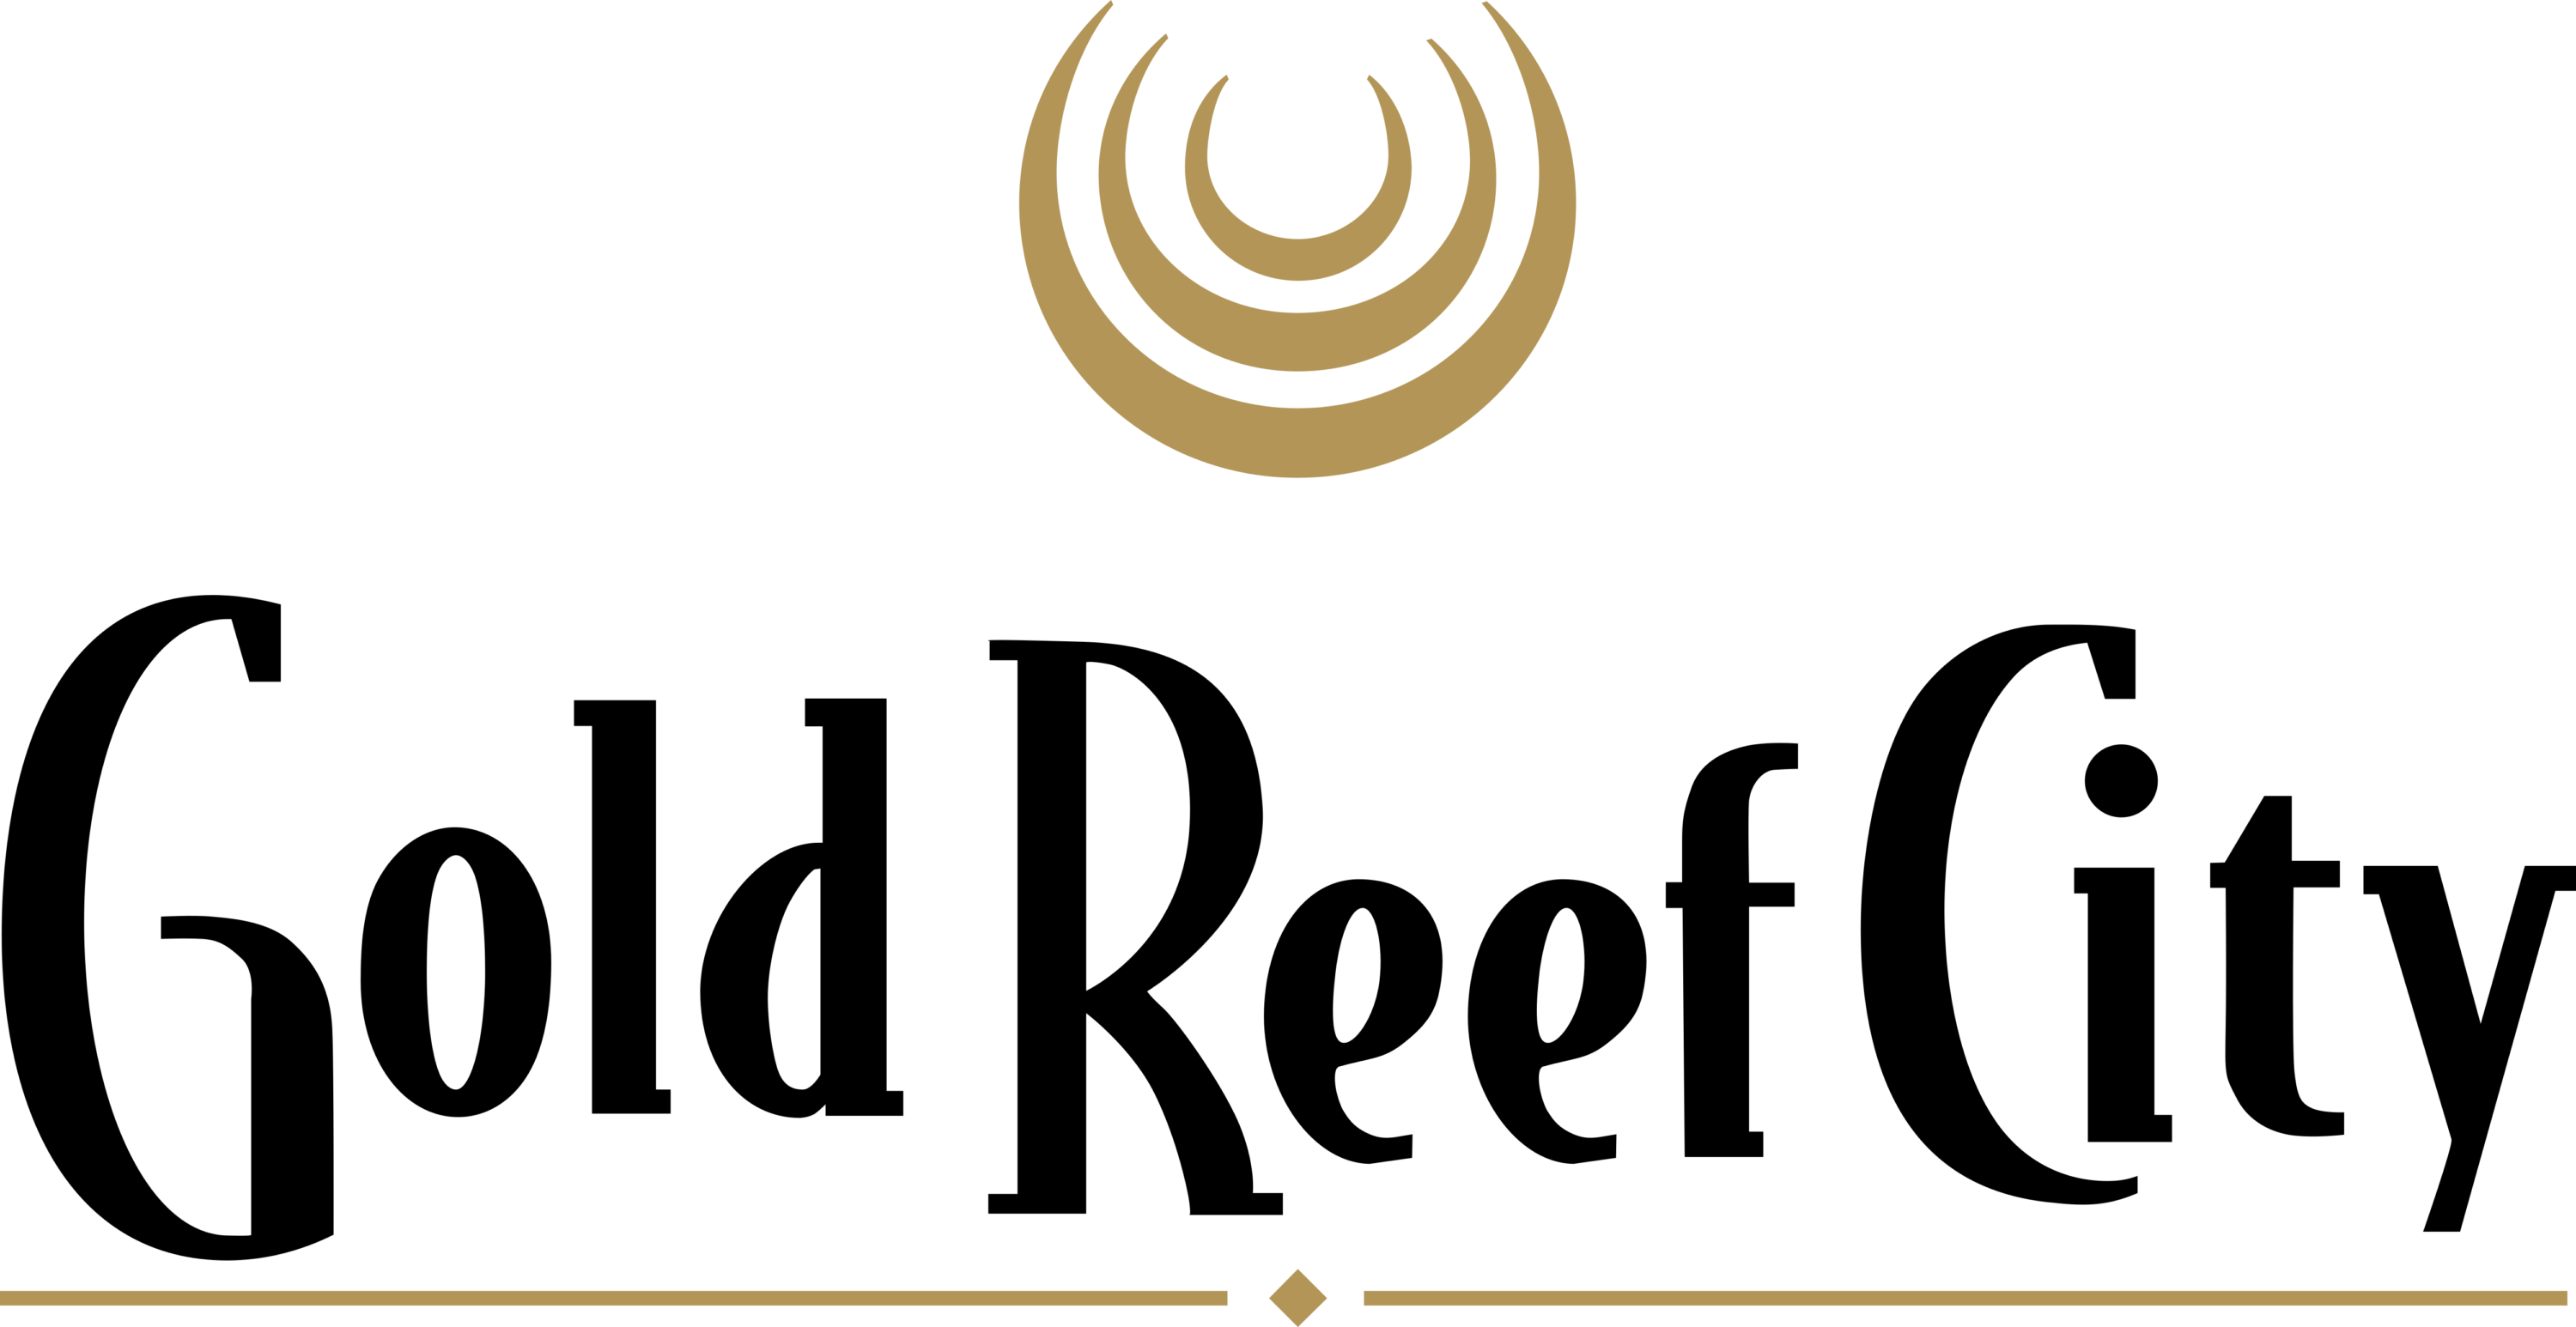 Gold Reef City Logo